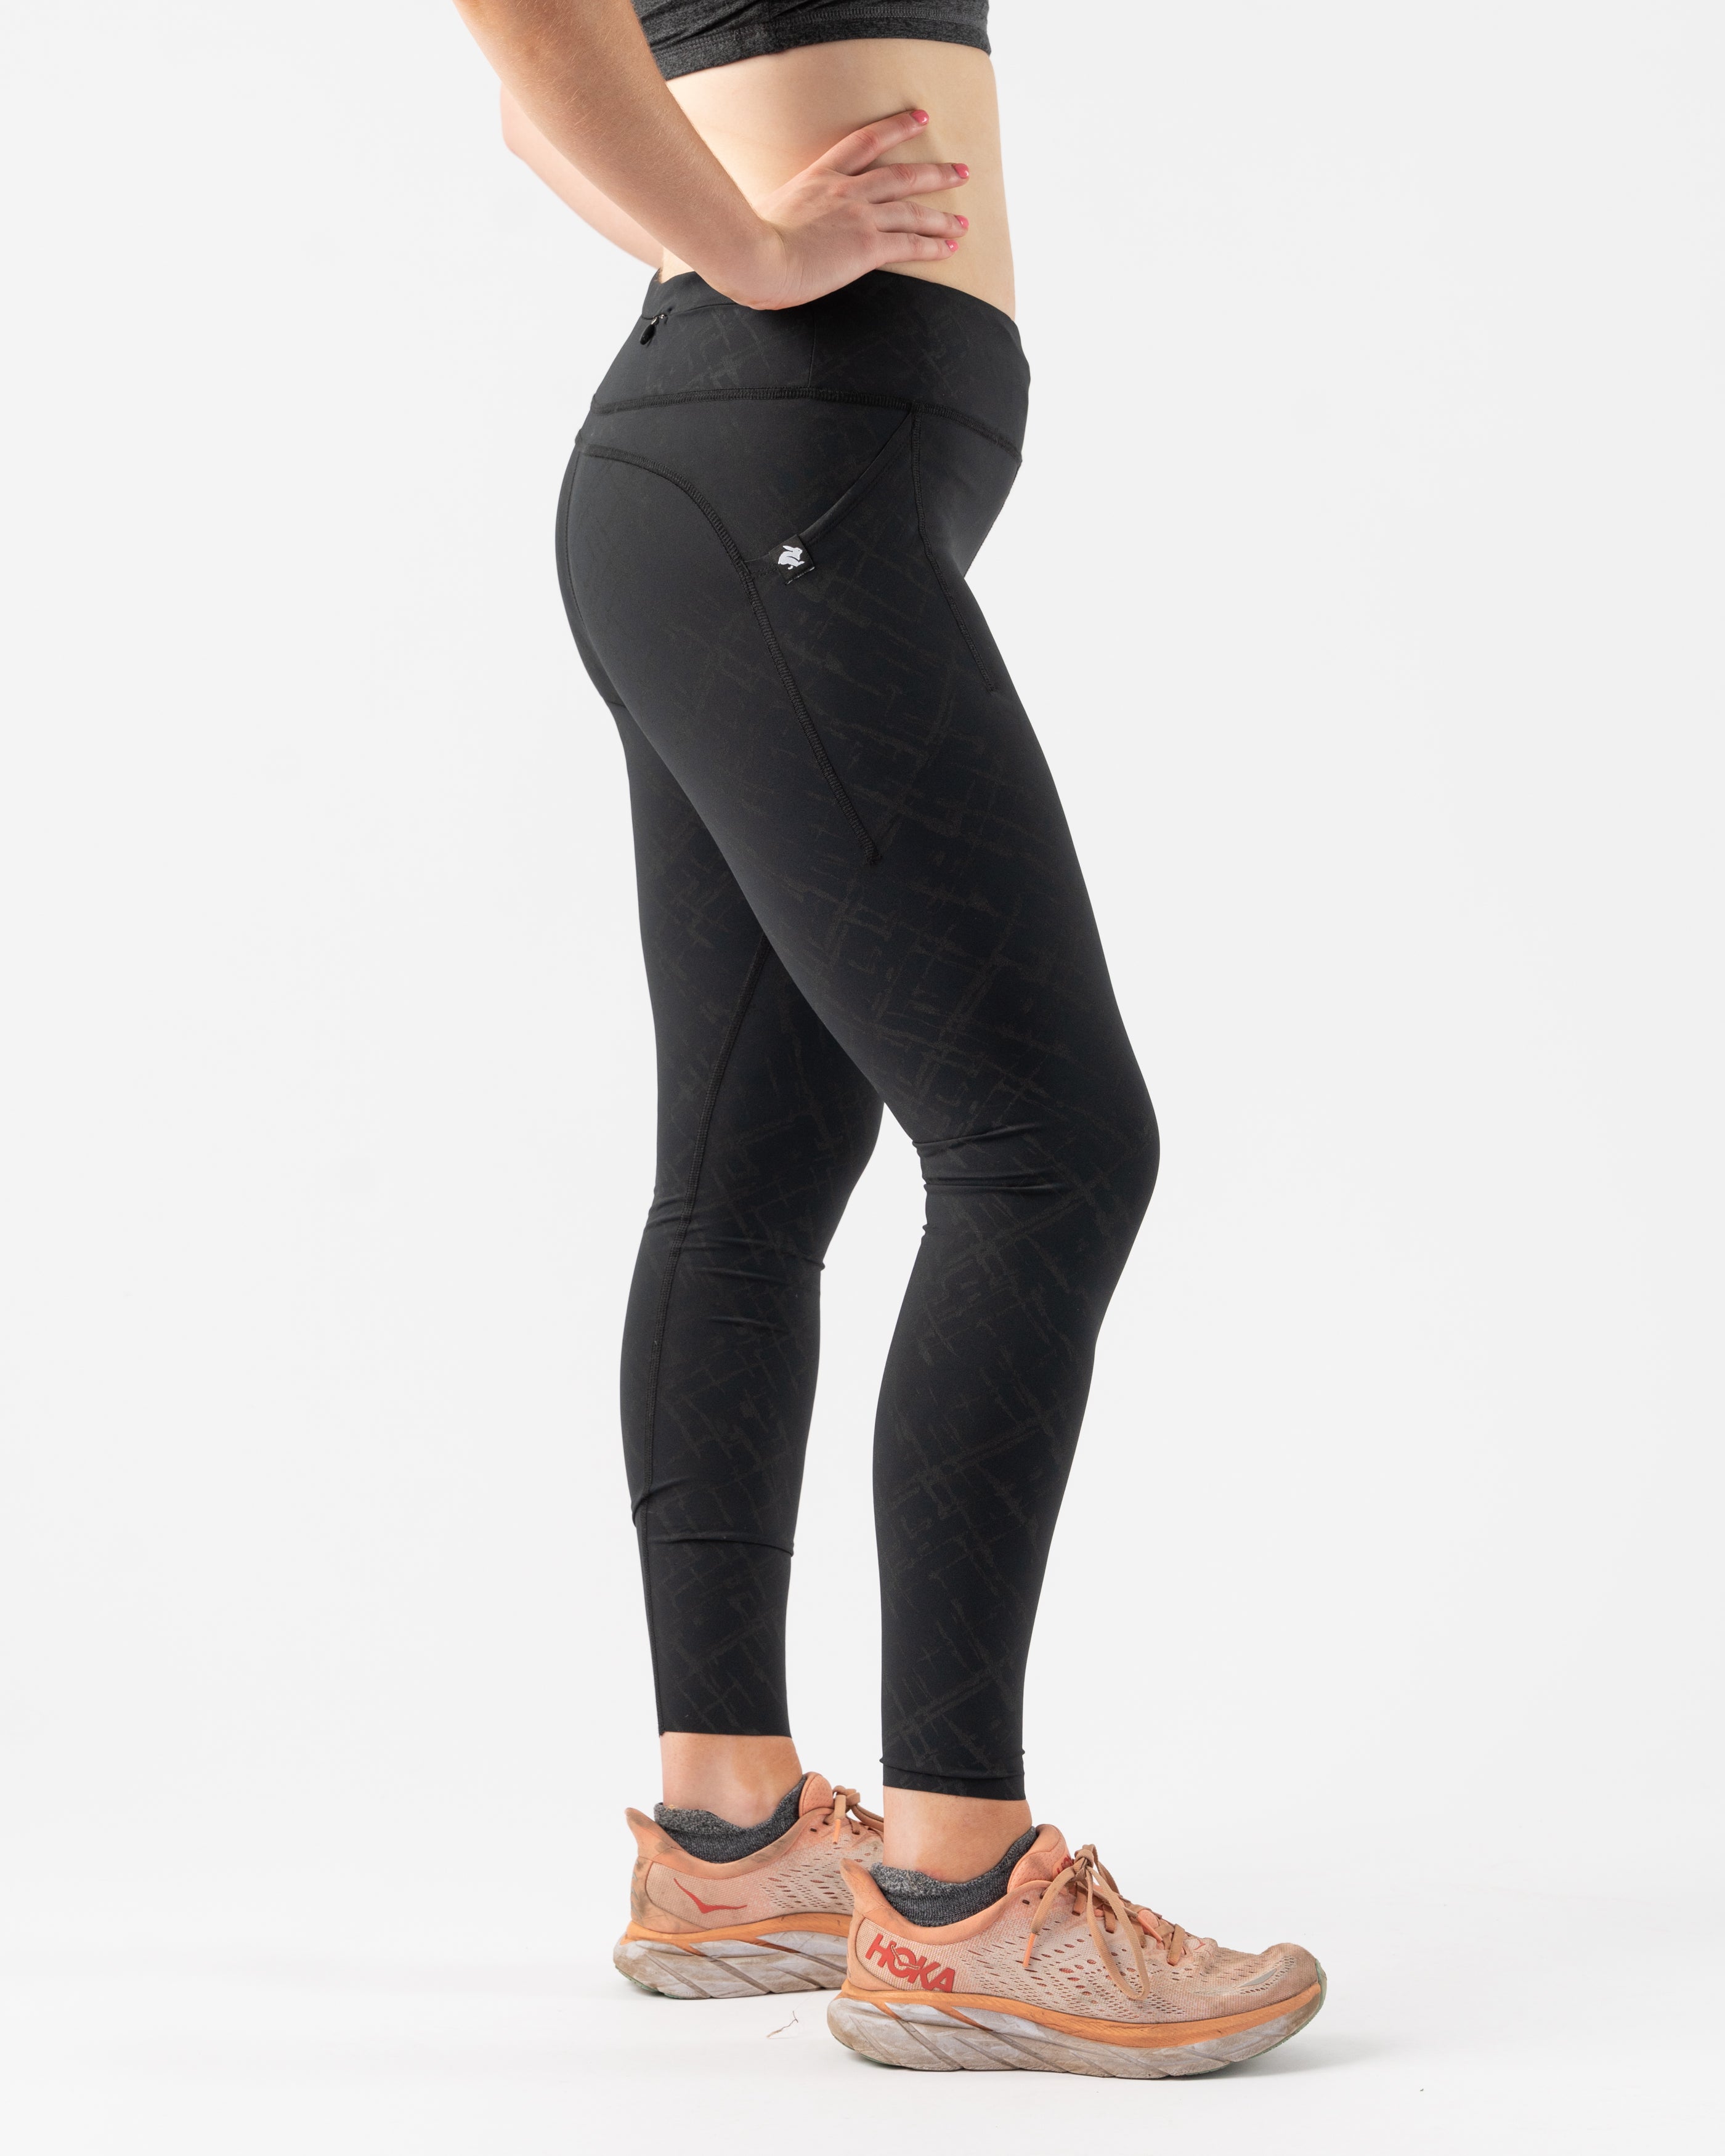 Fvwitlyh Along Fit Leggings For Women Leggings For Women High Waist Hole  Tummy Control Workout Yoga Pants Black,S 